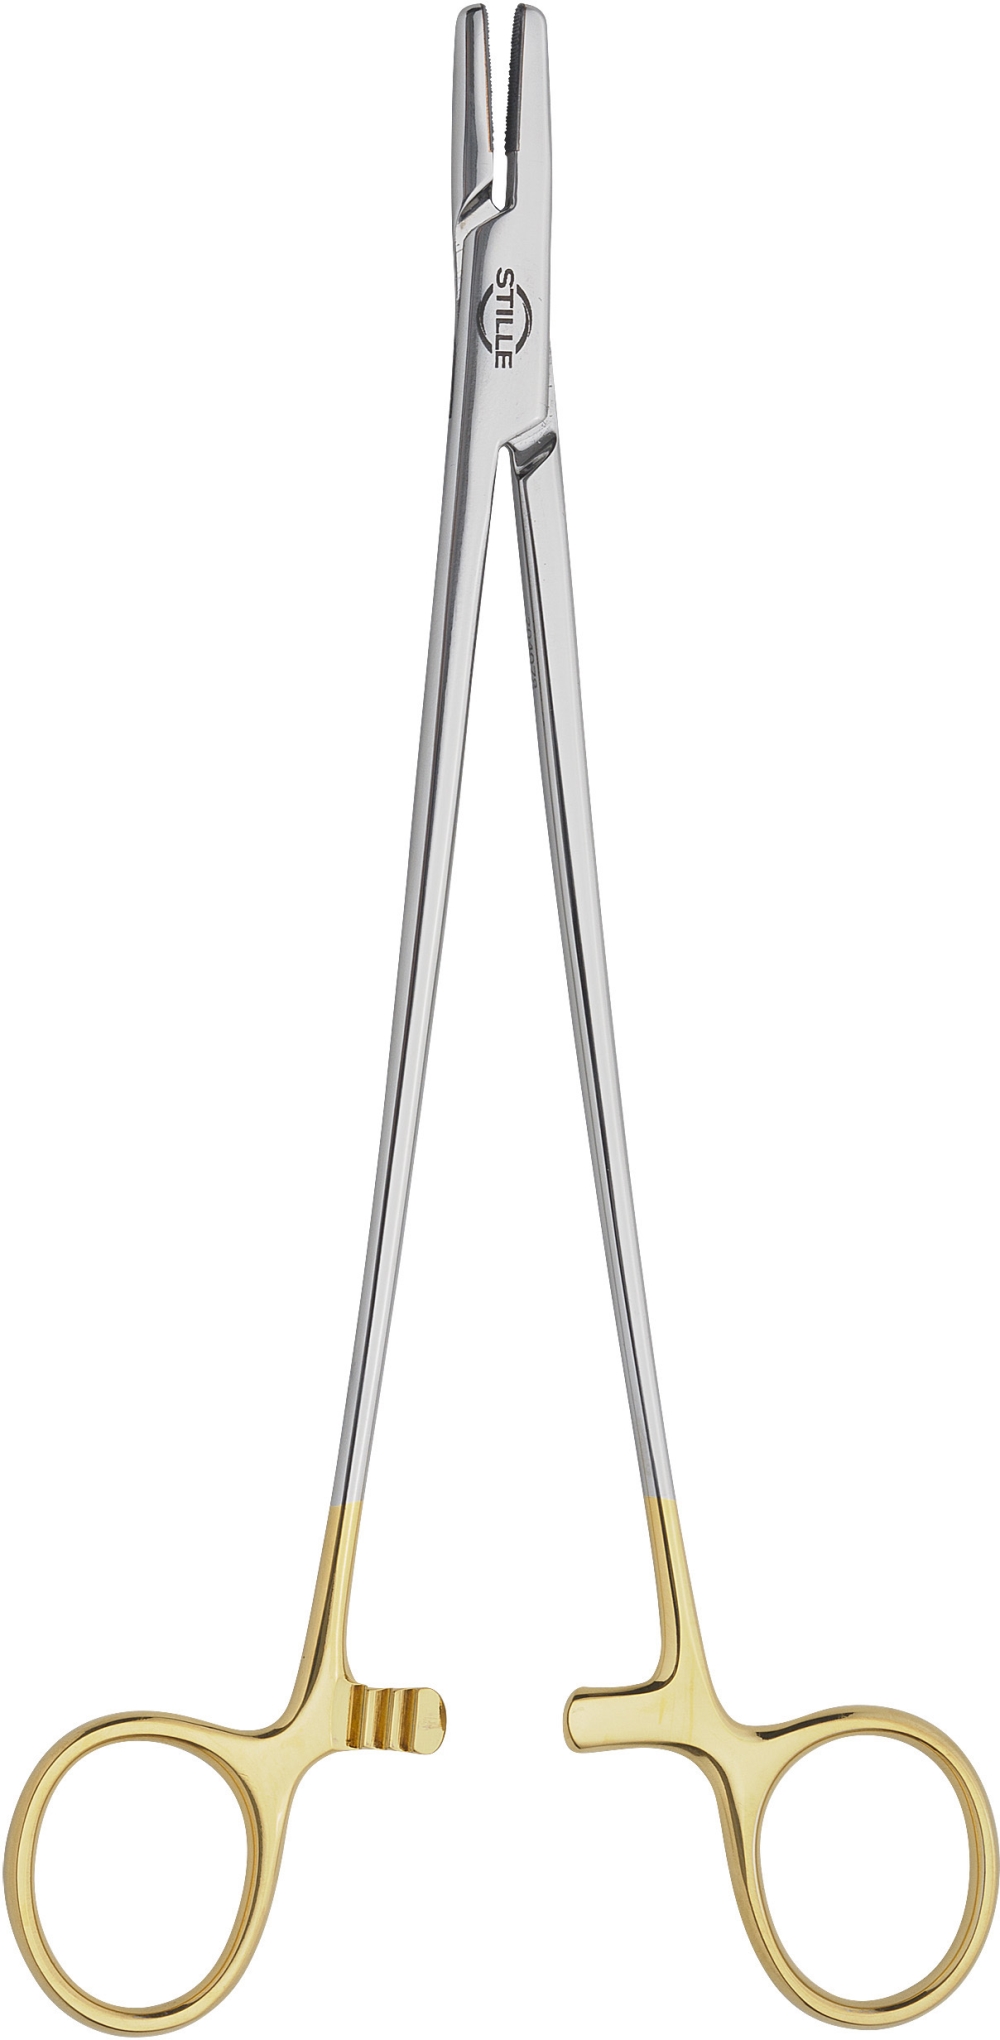 Nålförare ståltråd - 18,5cm hårdmetall grov